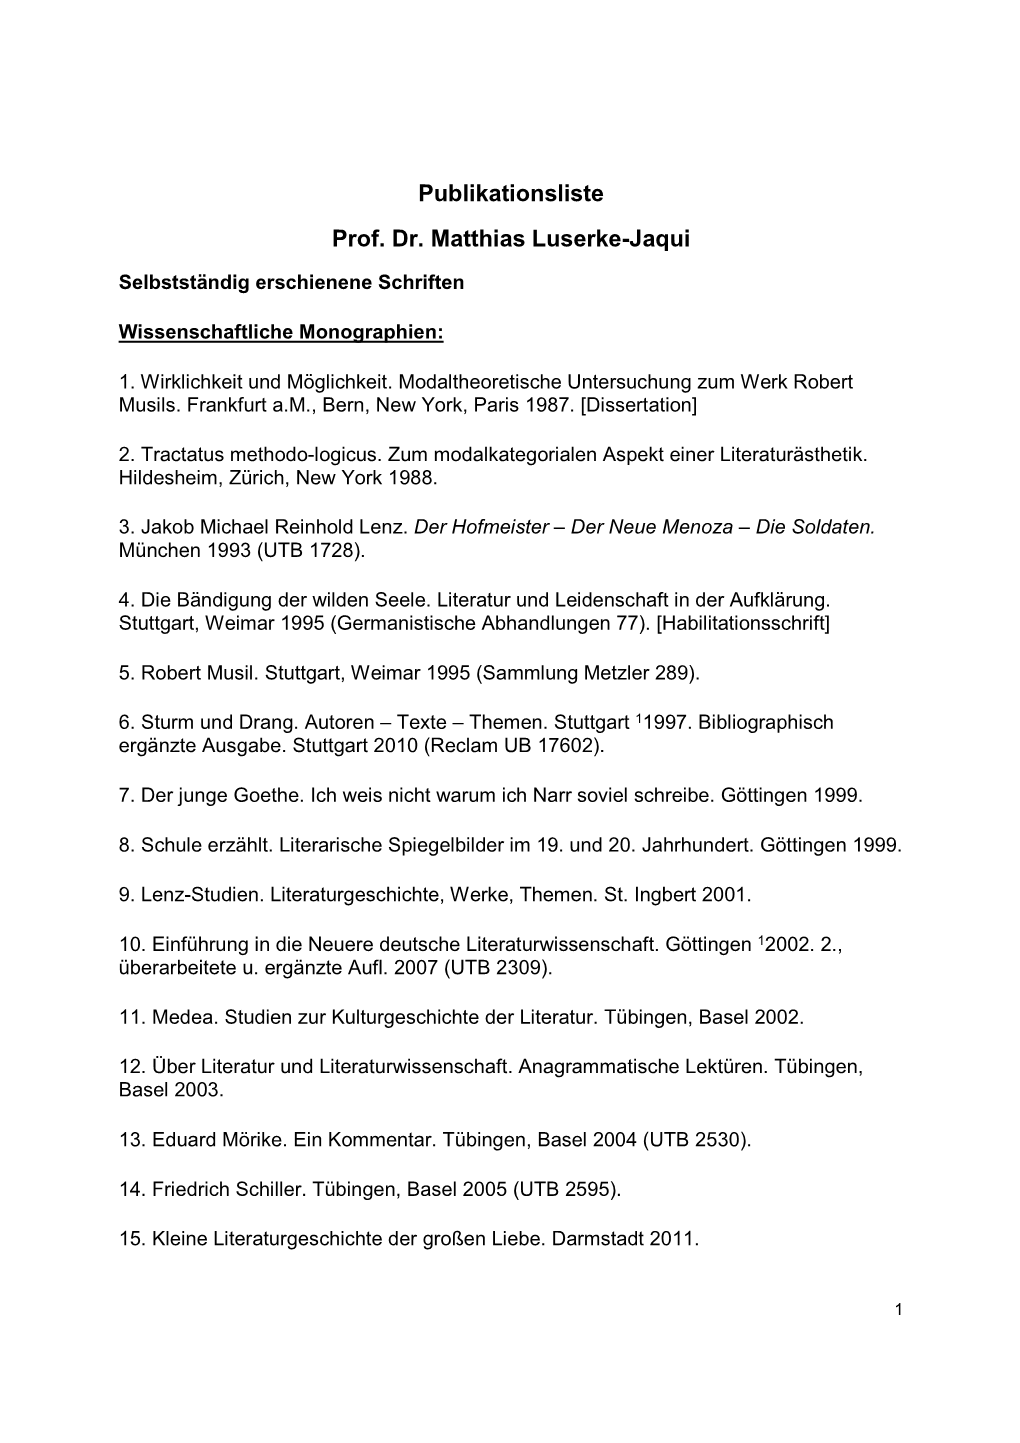 Publikationsliste Prof. Dr. Matthias Luserke-Jaqui